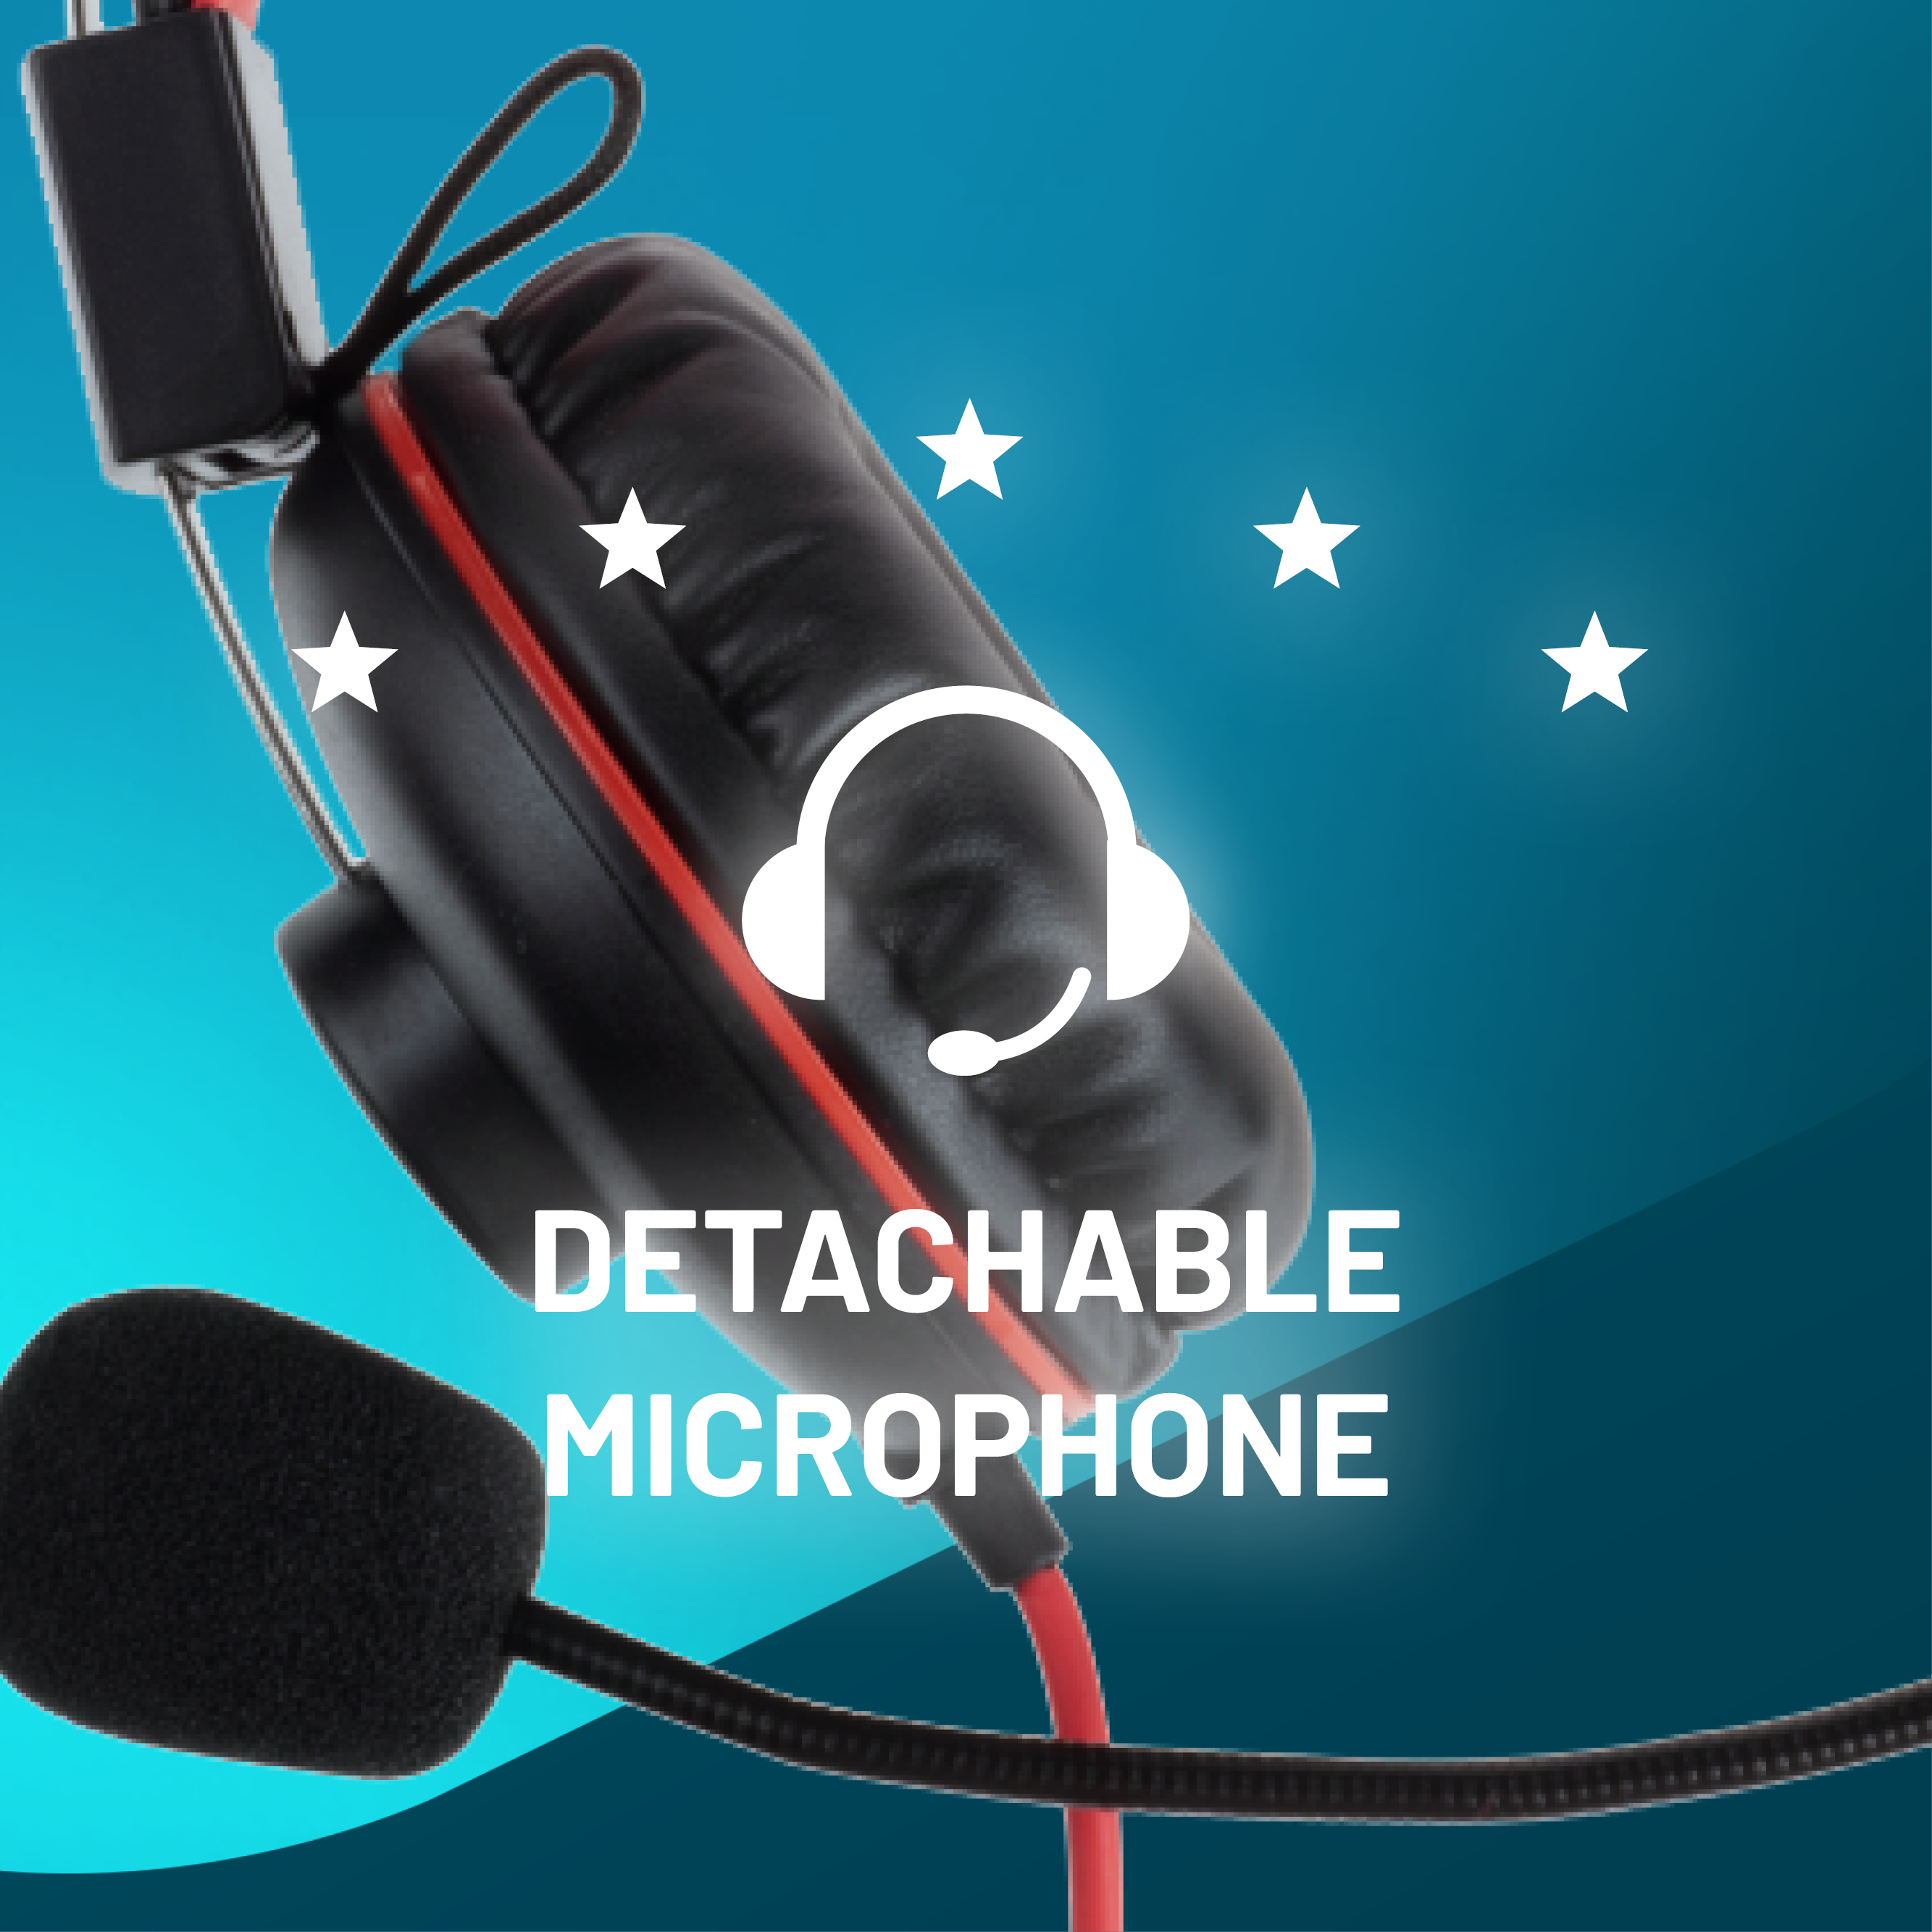 Headset, Schwarz-Rot Gaming Universal On-ear GEEKHOME Headset